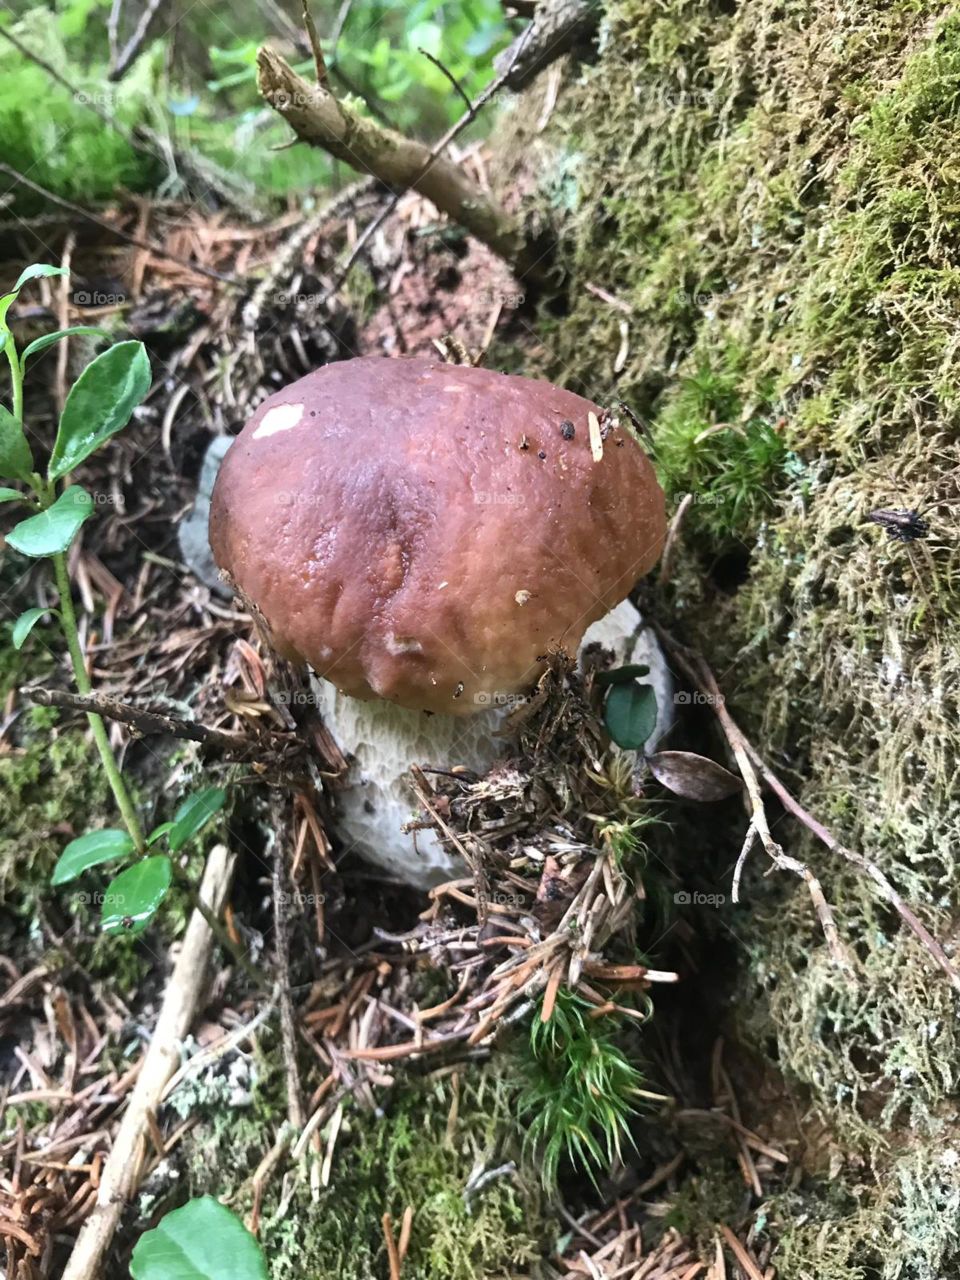 Mushroom, porcino, Austria, wood,fungi,green